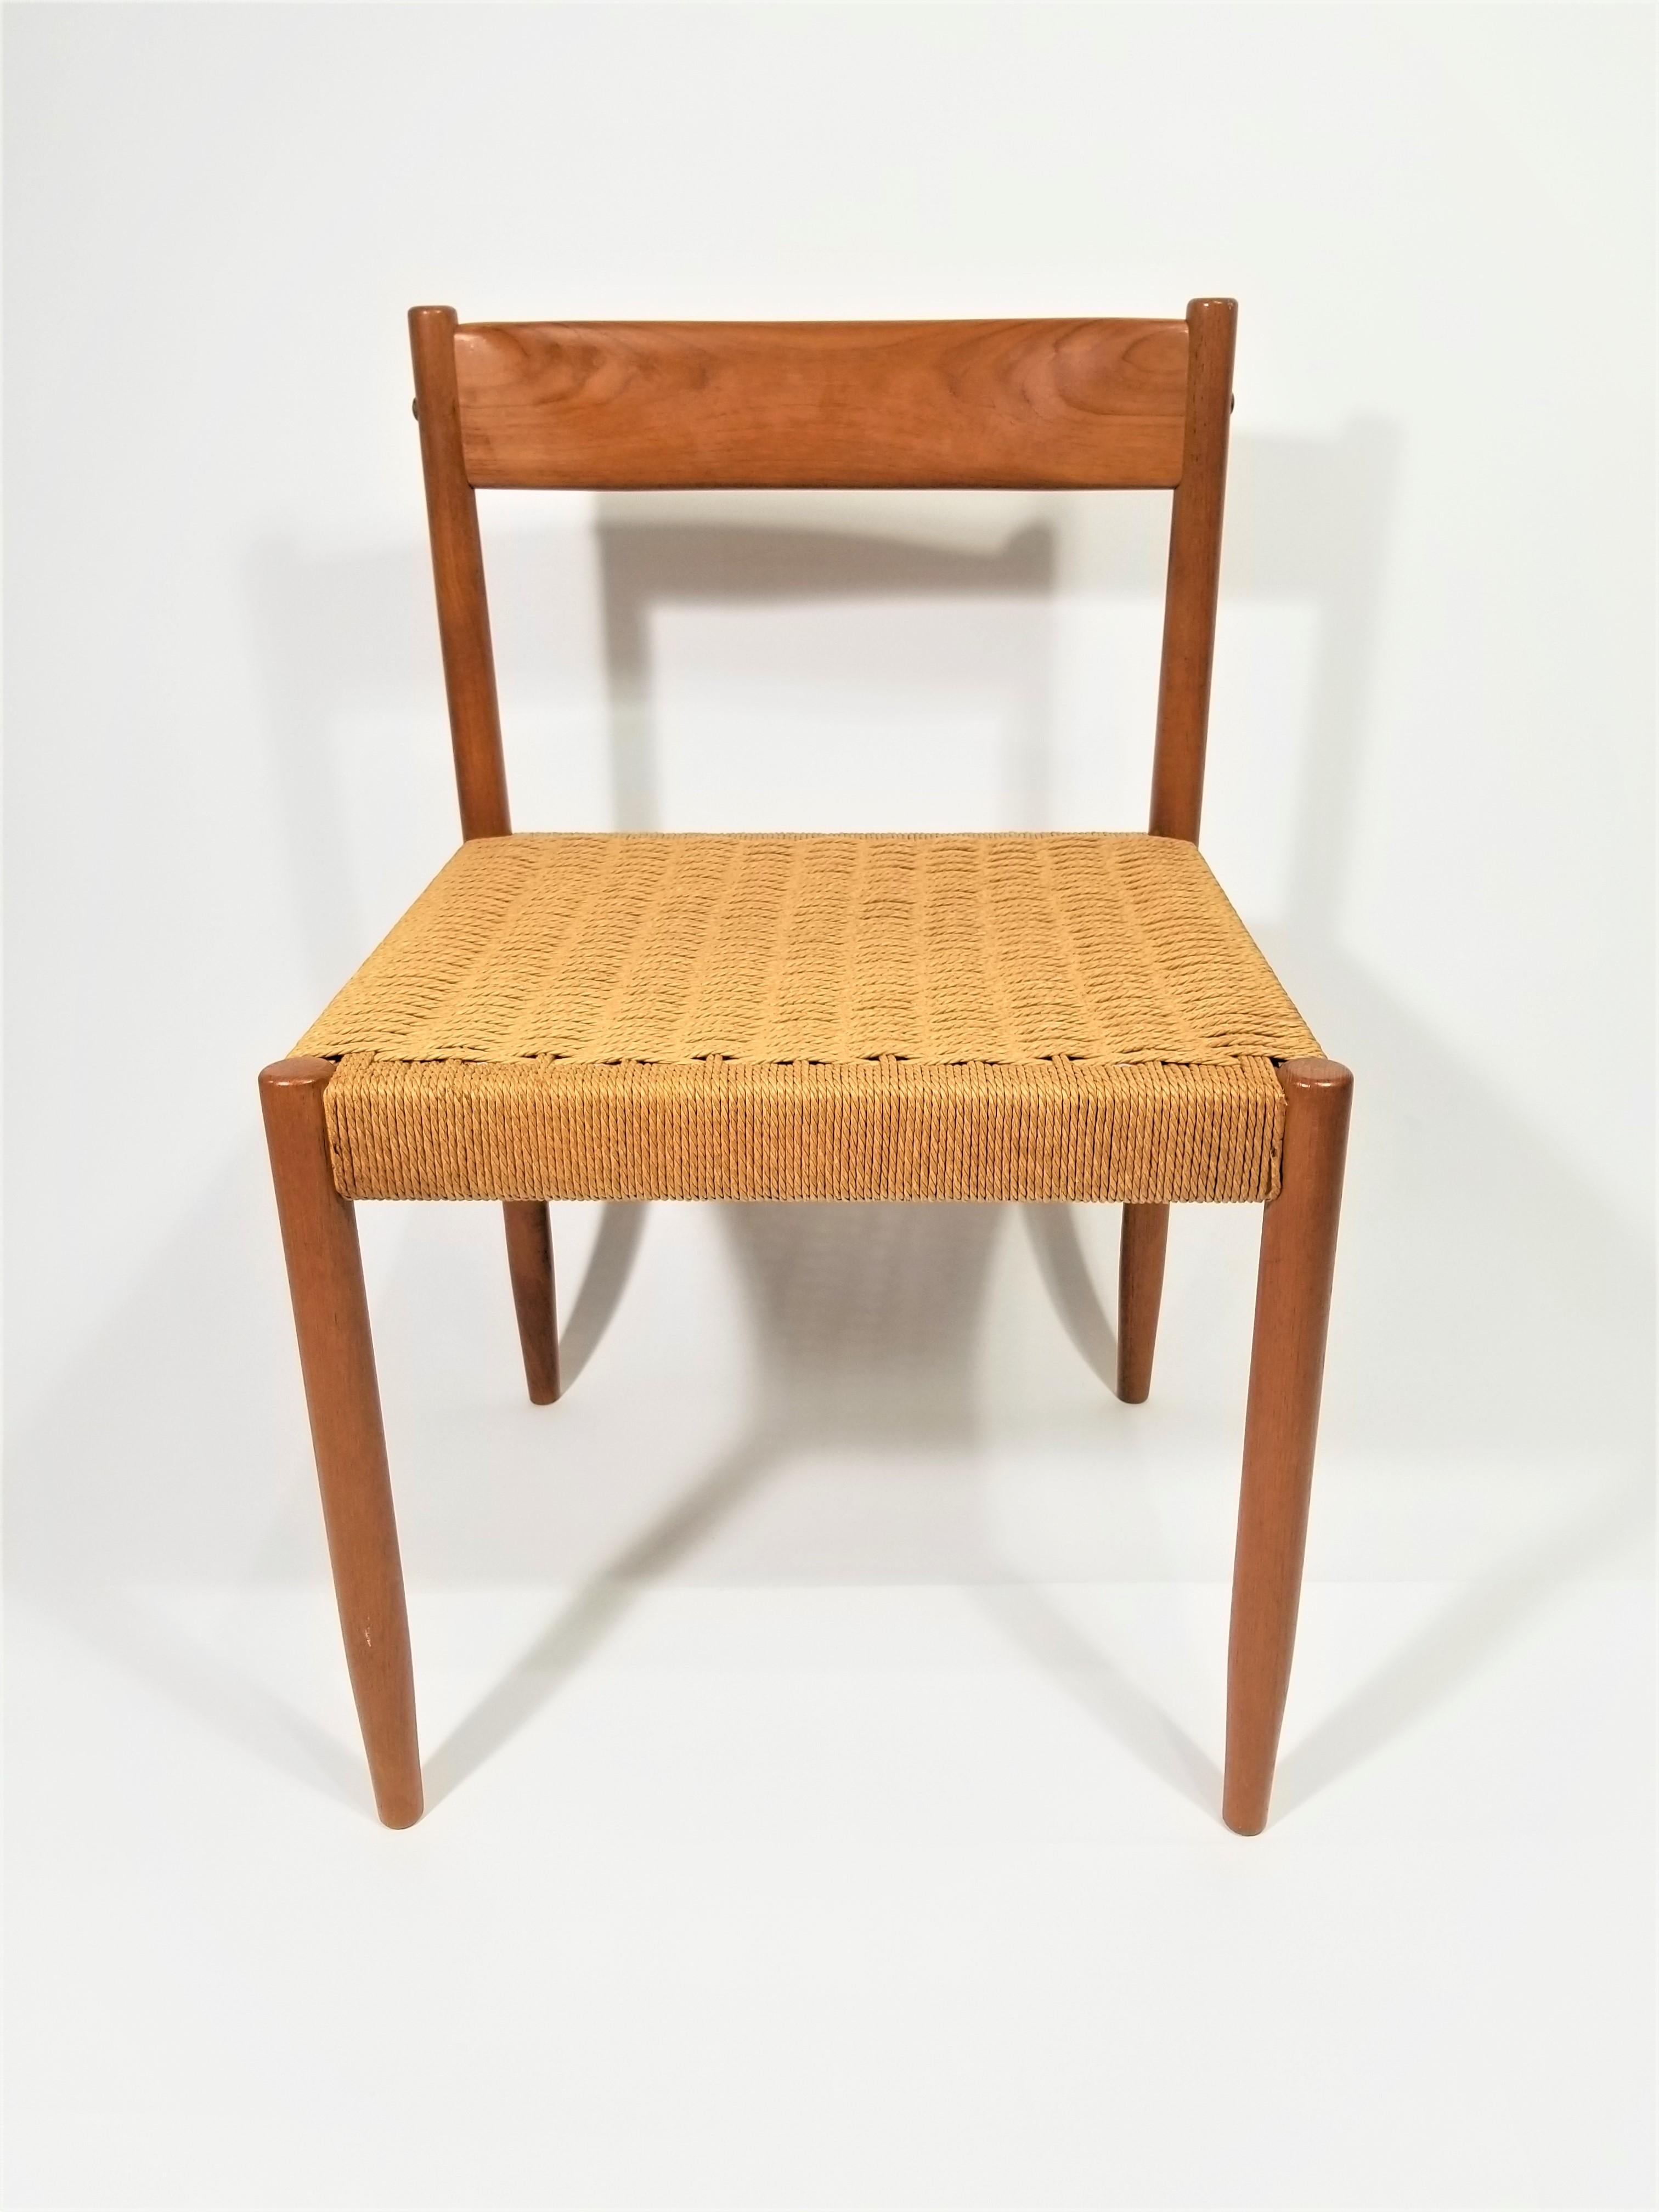 Poul Volther for Frem Rojle Danish Teak Woven Chair Midcentury 1960s  For Sale 14